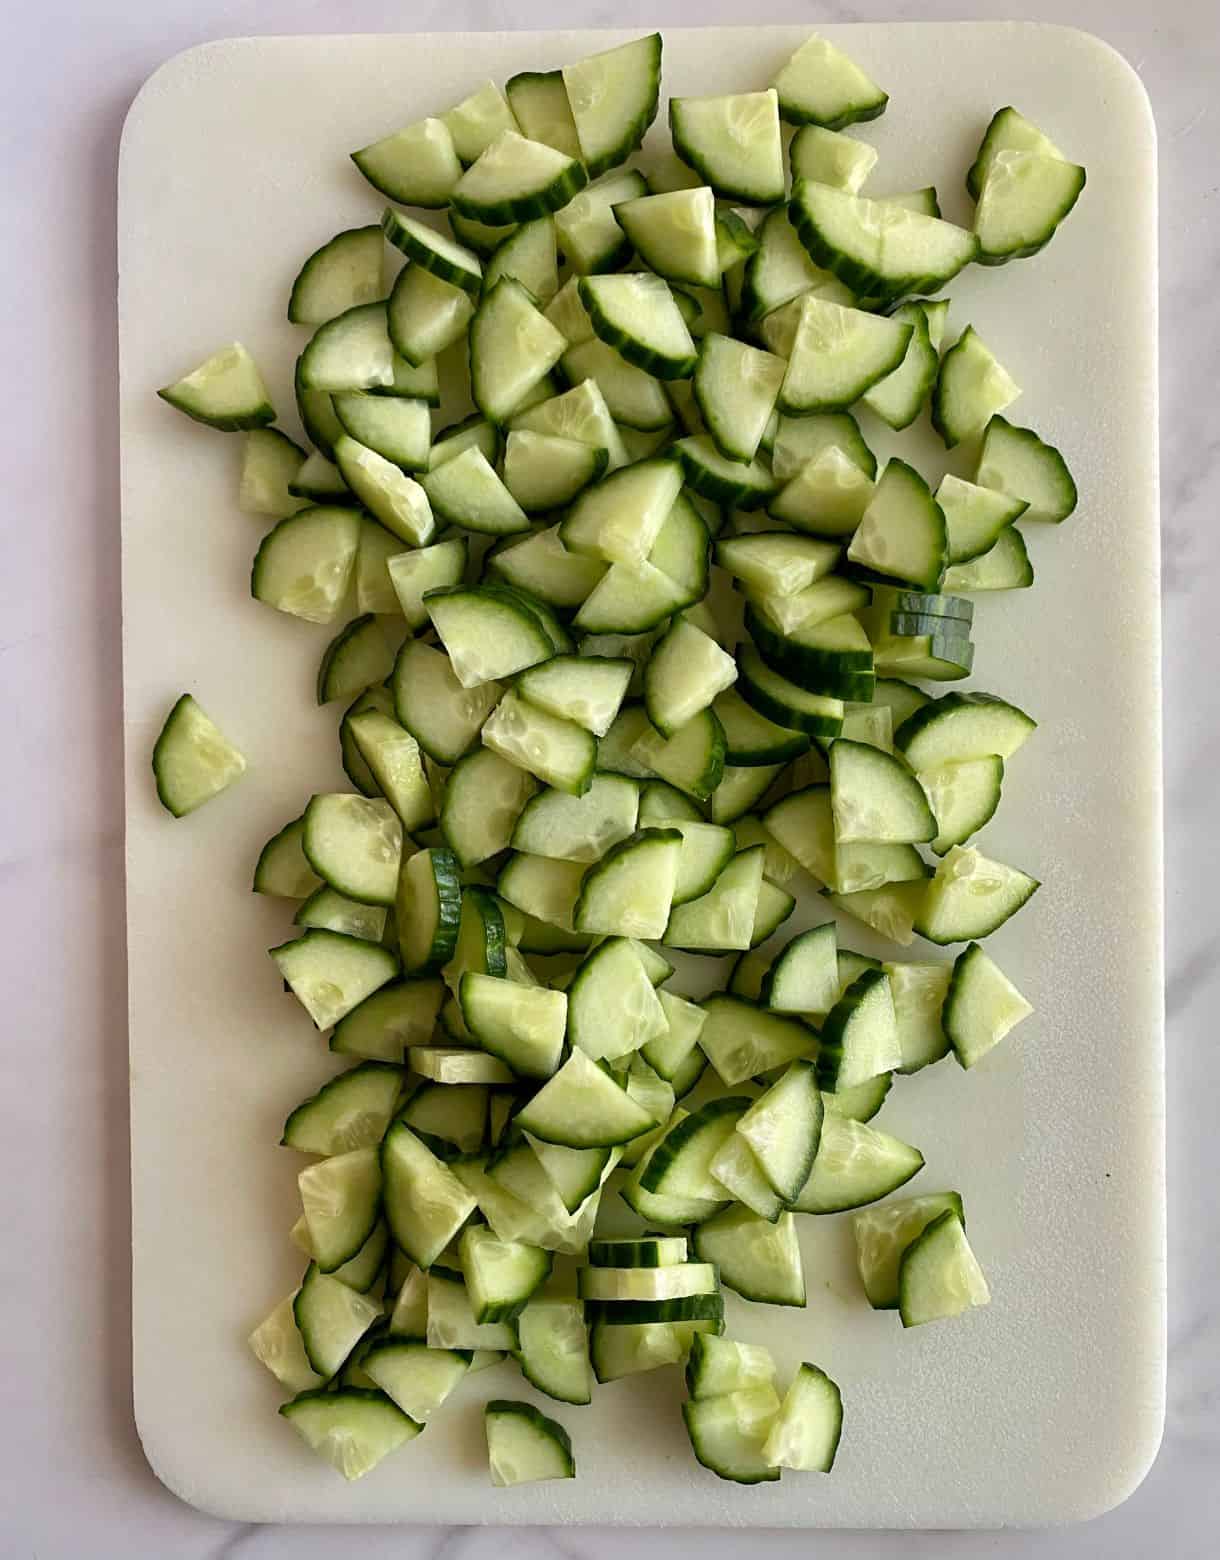 A cutting board with chopped cucumbers.